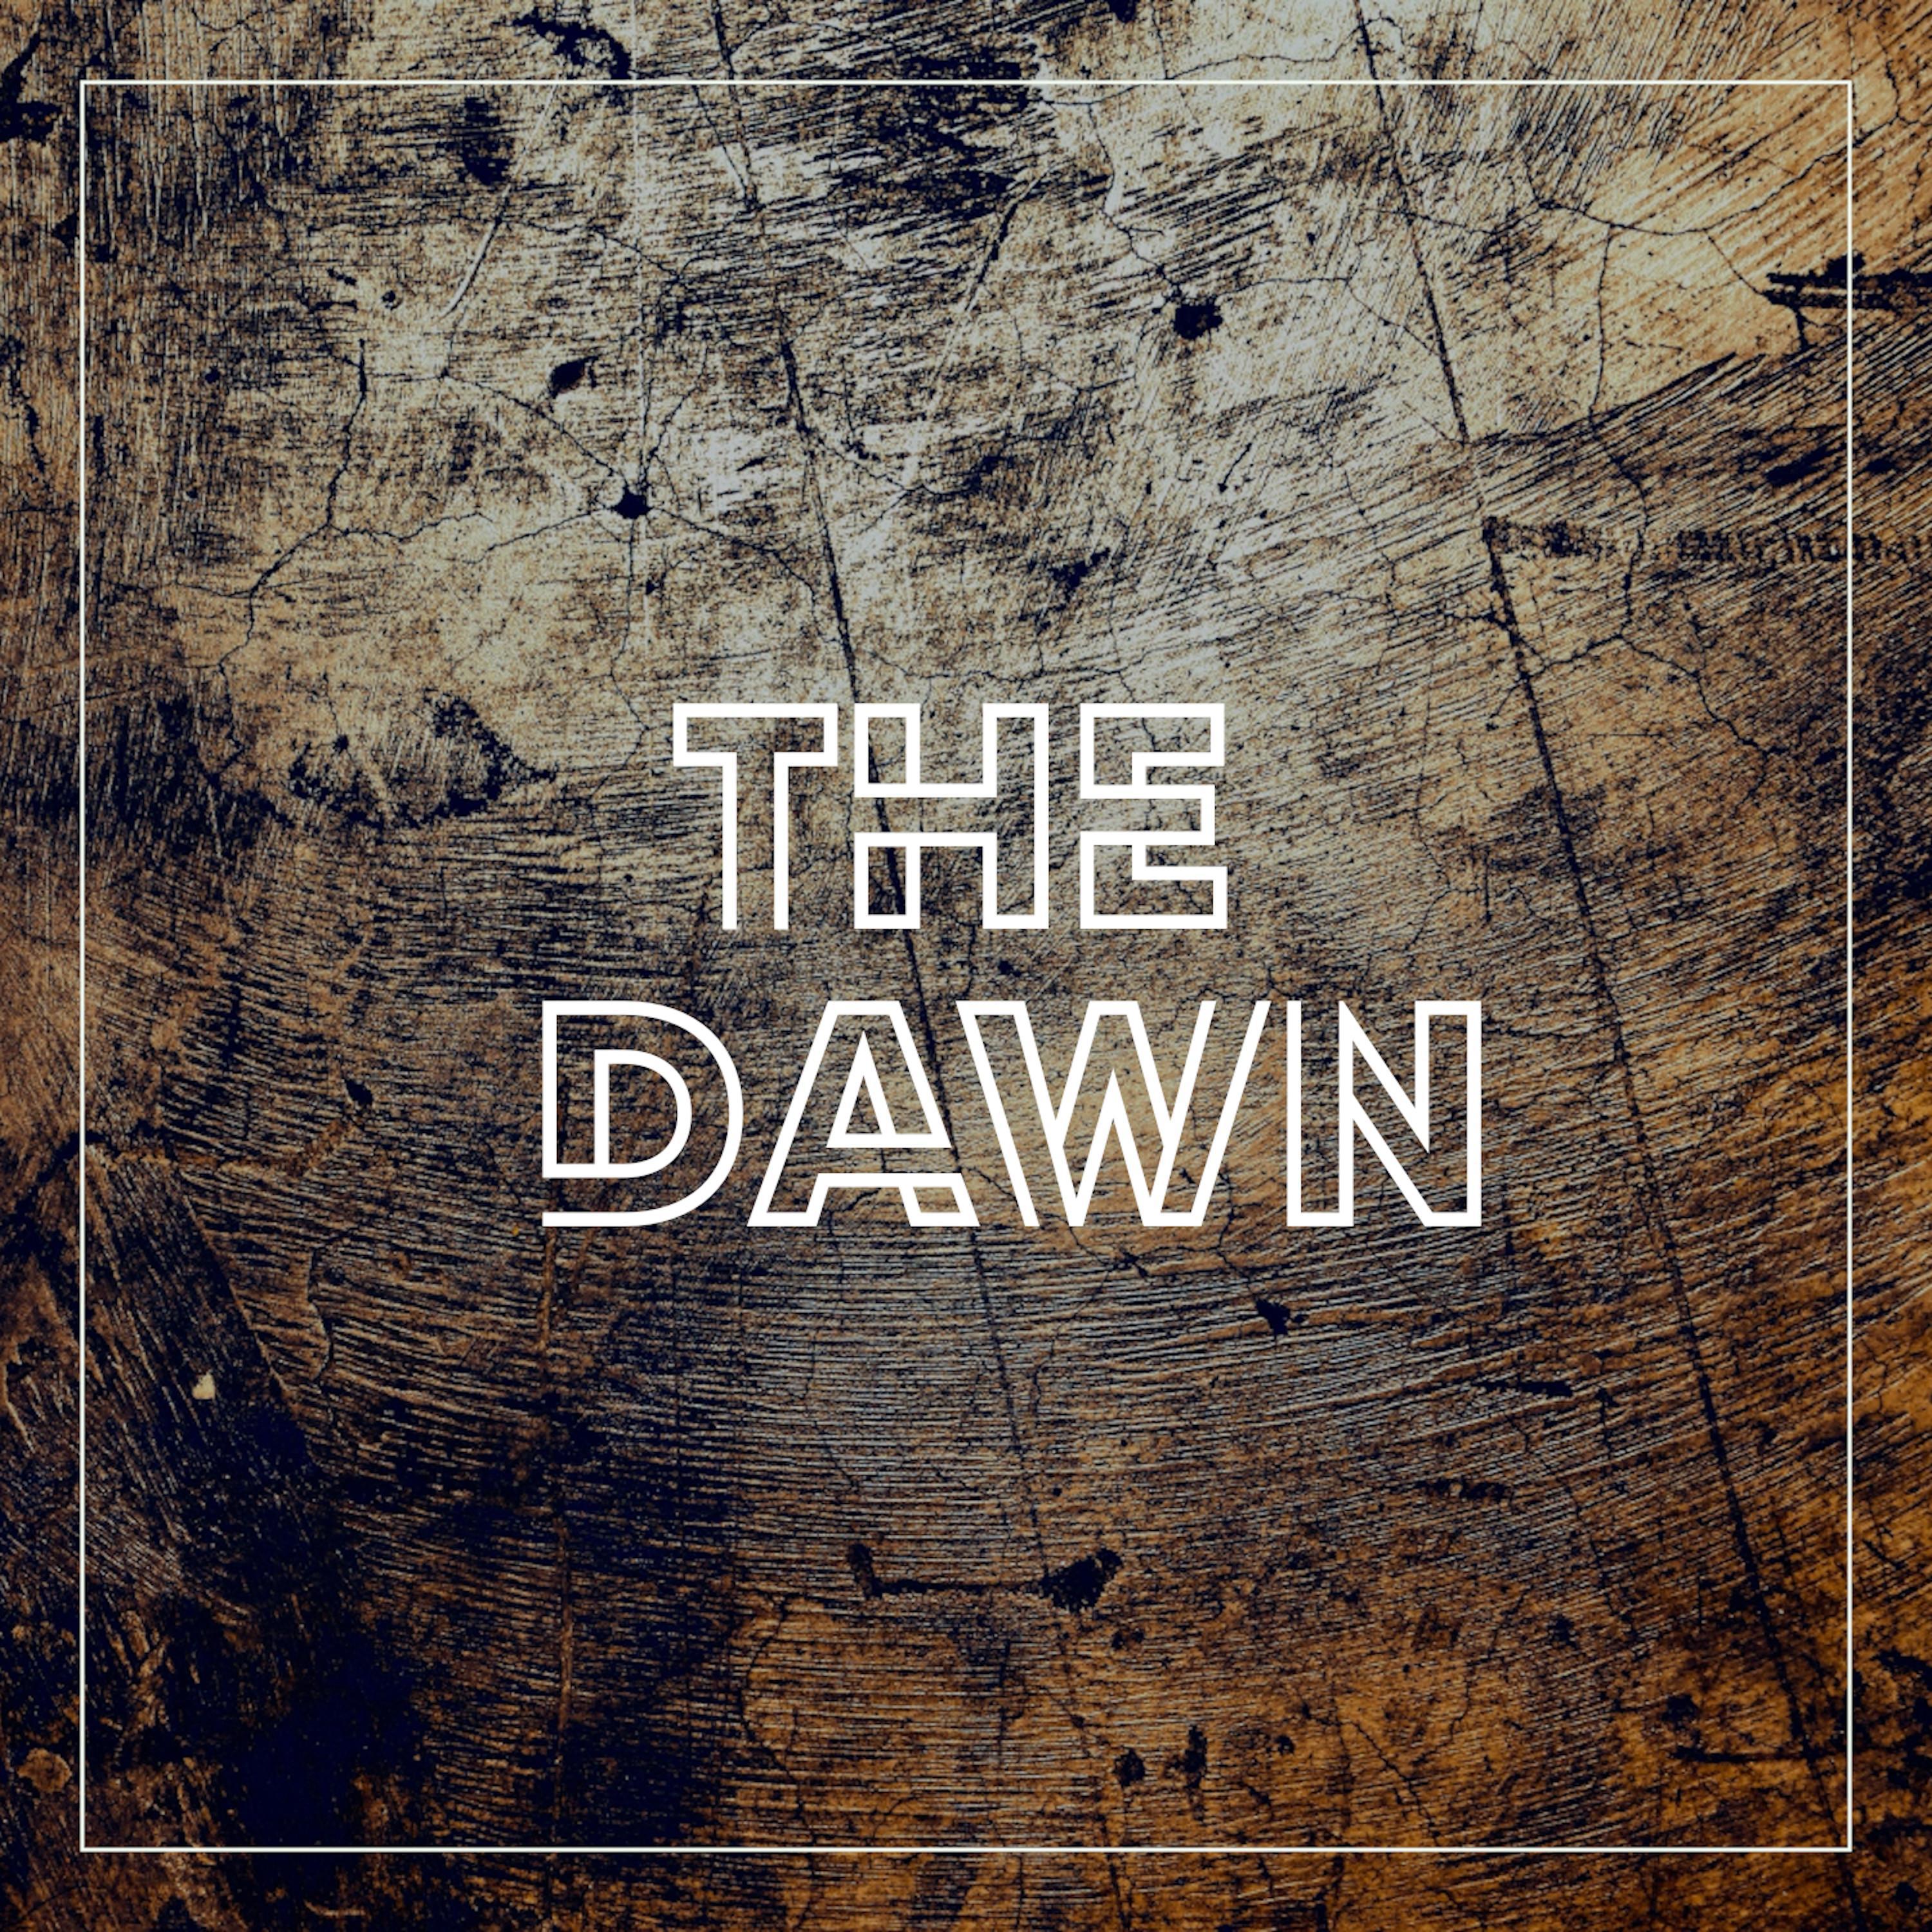 Dubawan - The Dawn